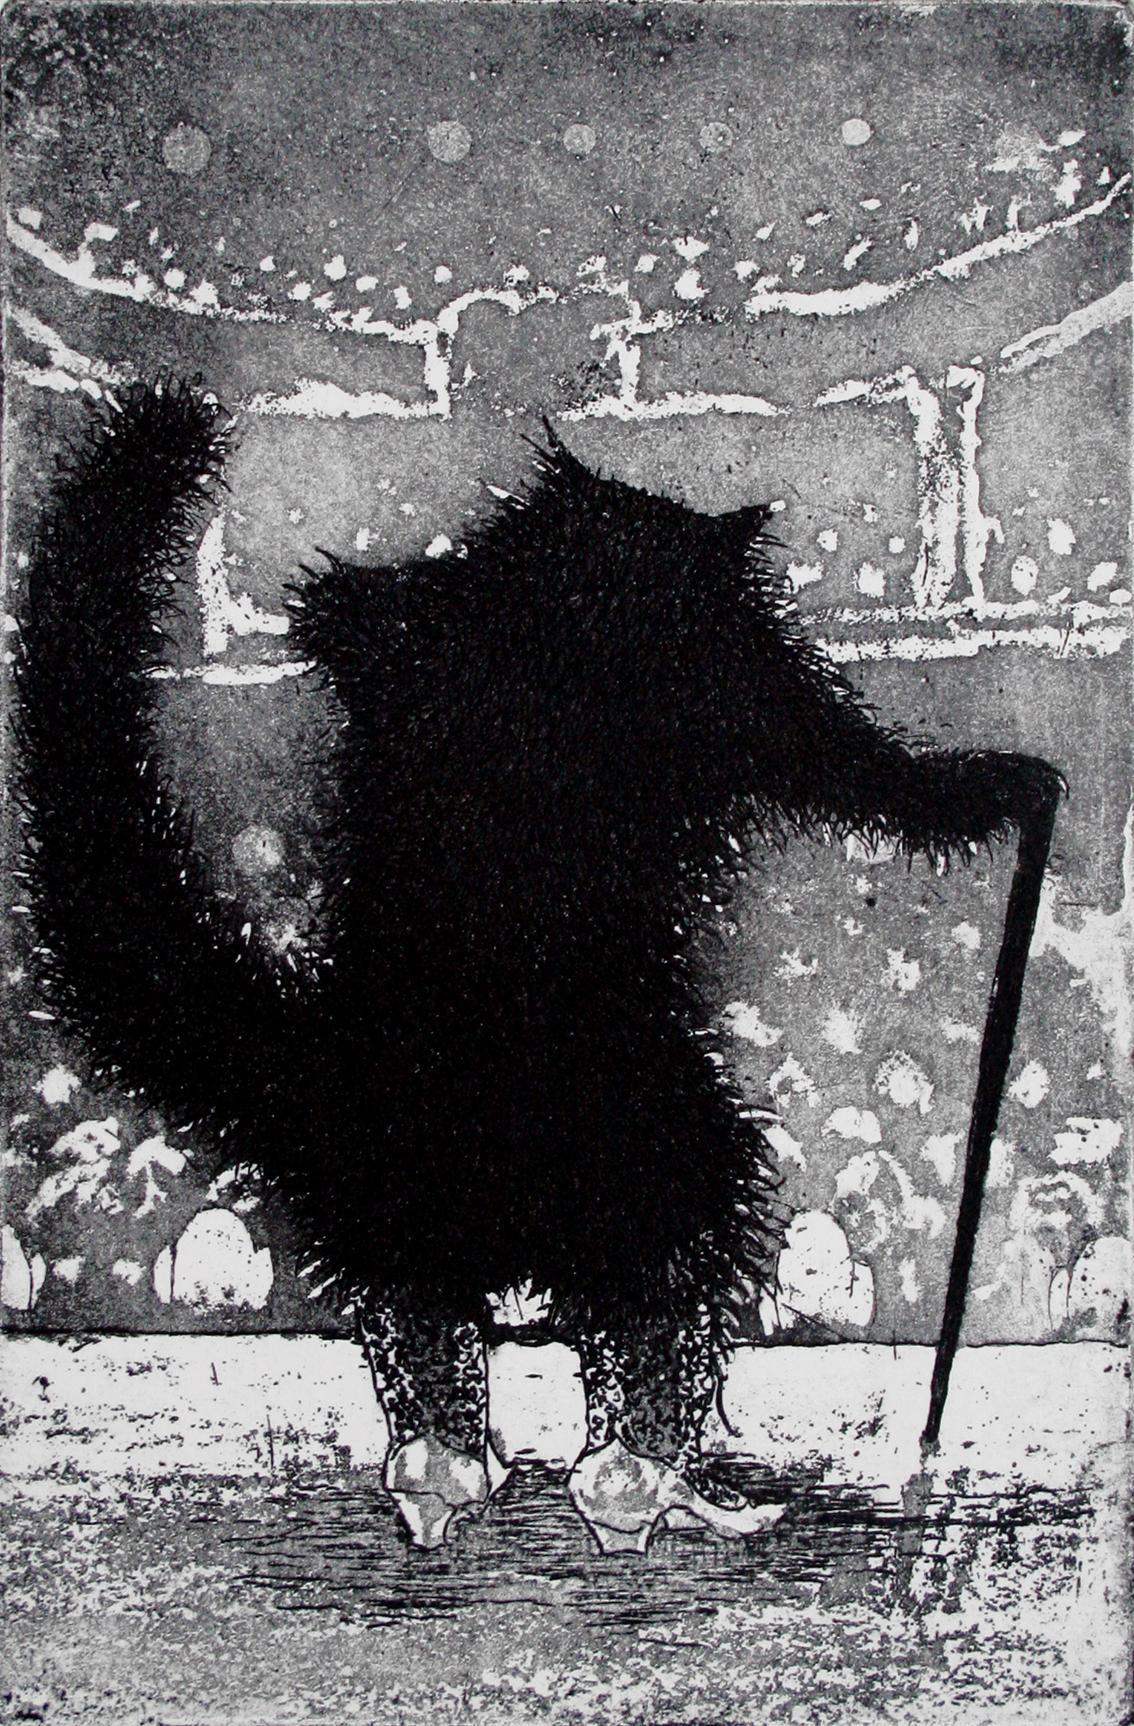 Animal Print Tim Southall - Old Puss in Boots, édition limitée, art à prix abordable, imprimé animal